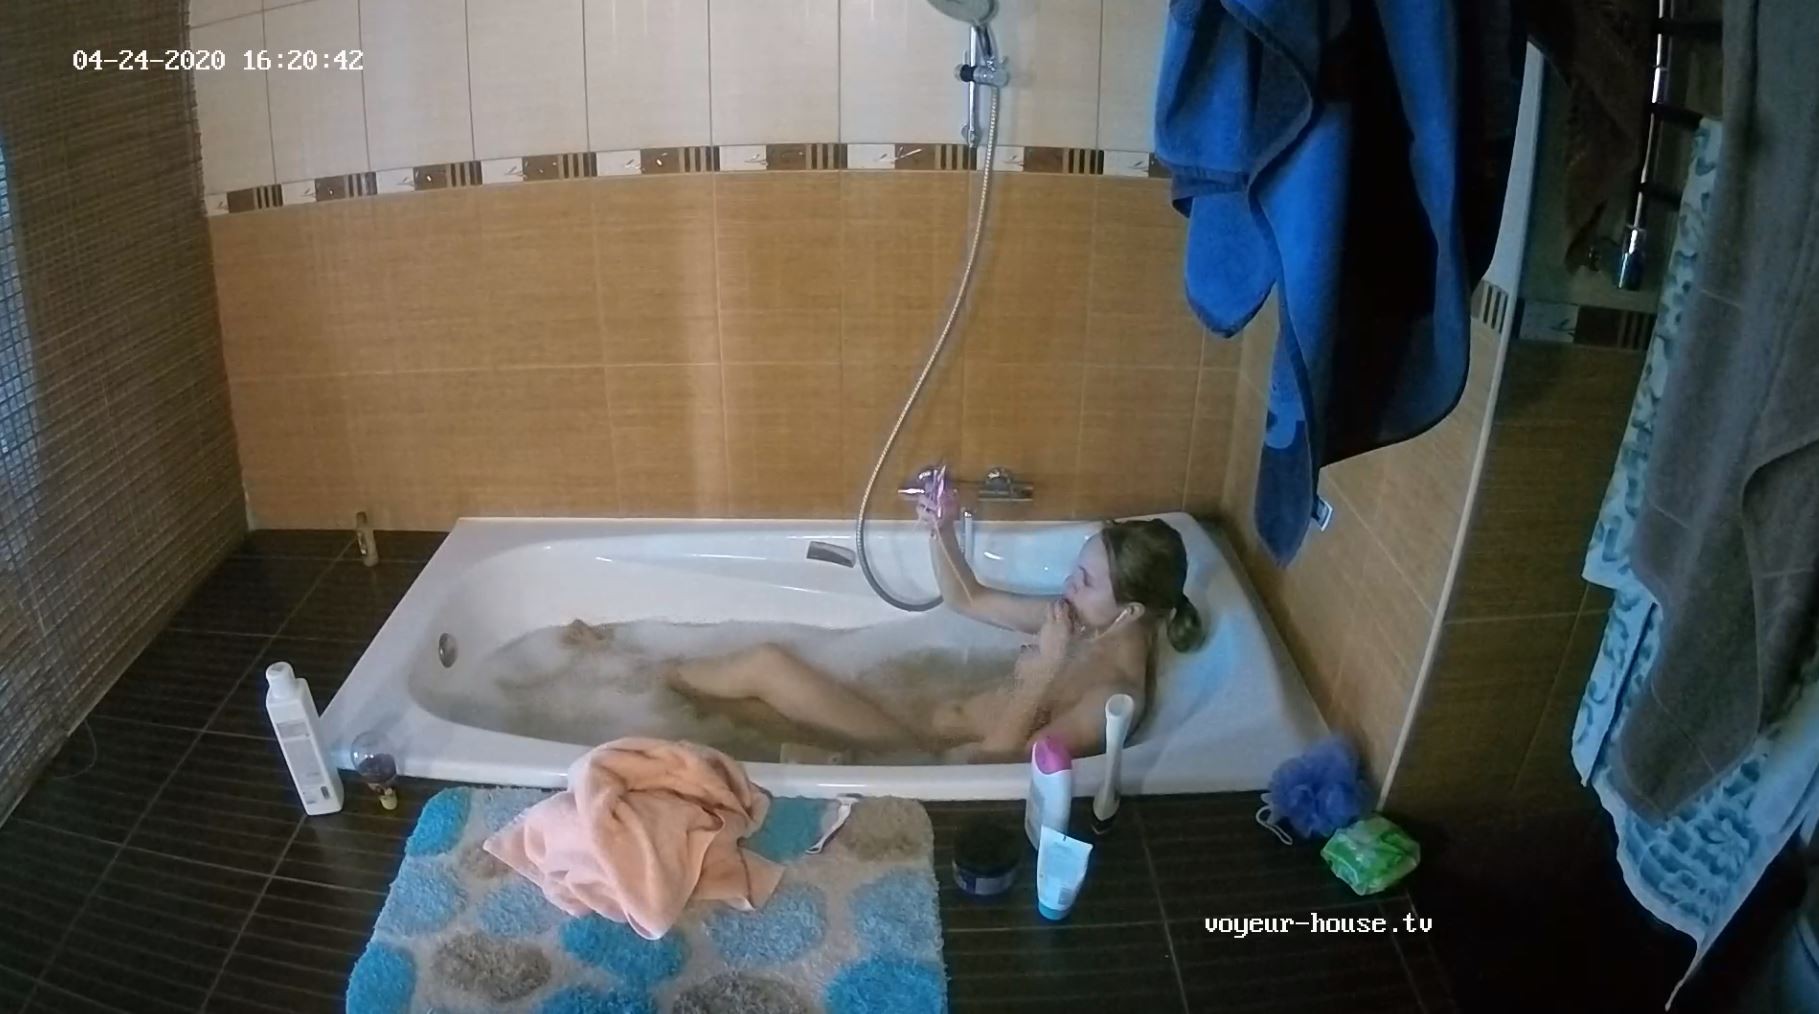 Valeria relaxing bath, Apr24/20